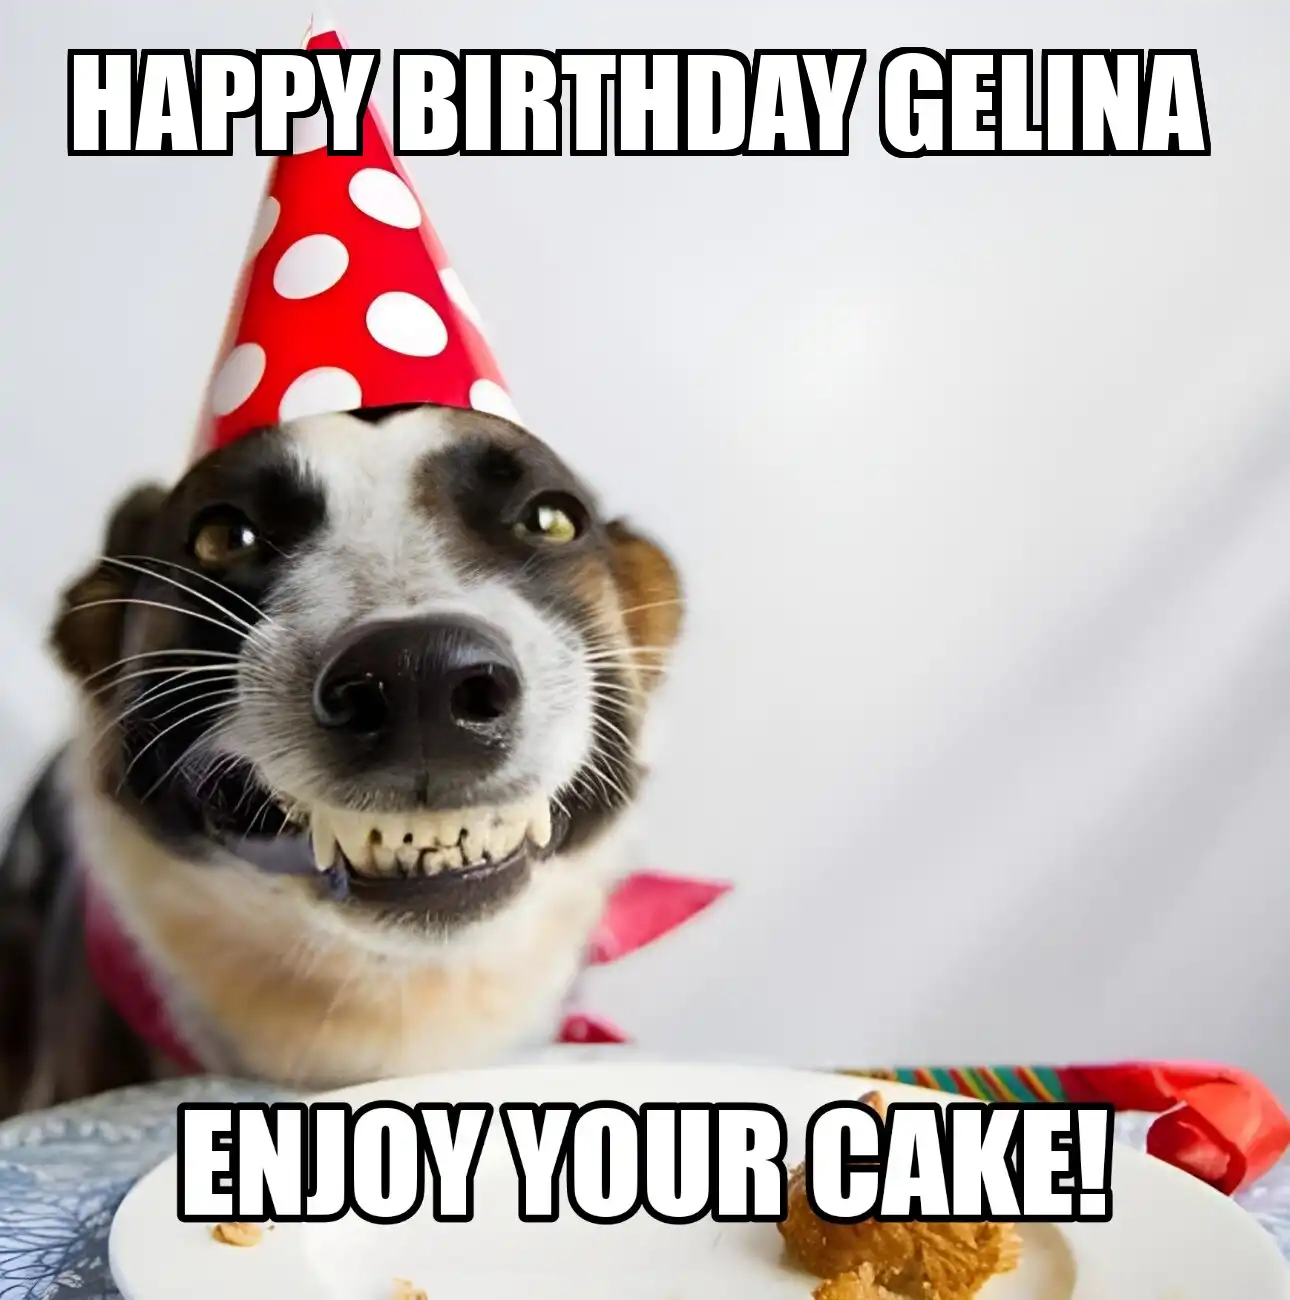 Happy Birthday Gelina Enjoy Your Cake Dog Meme